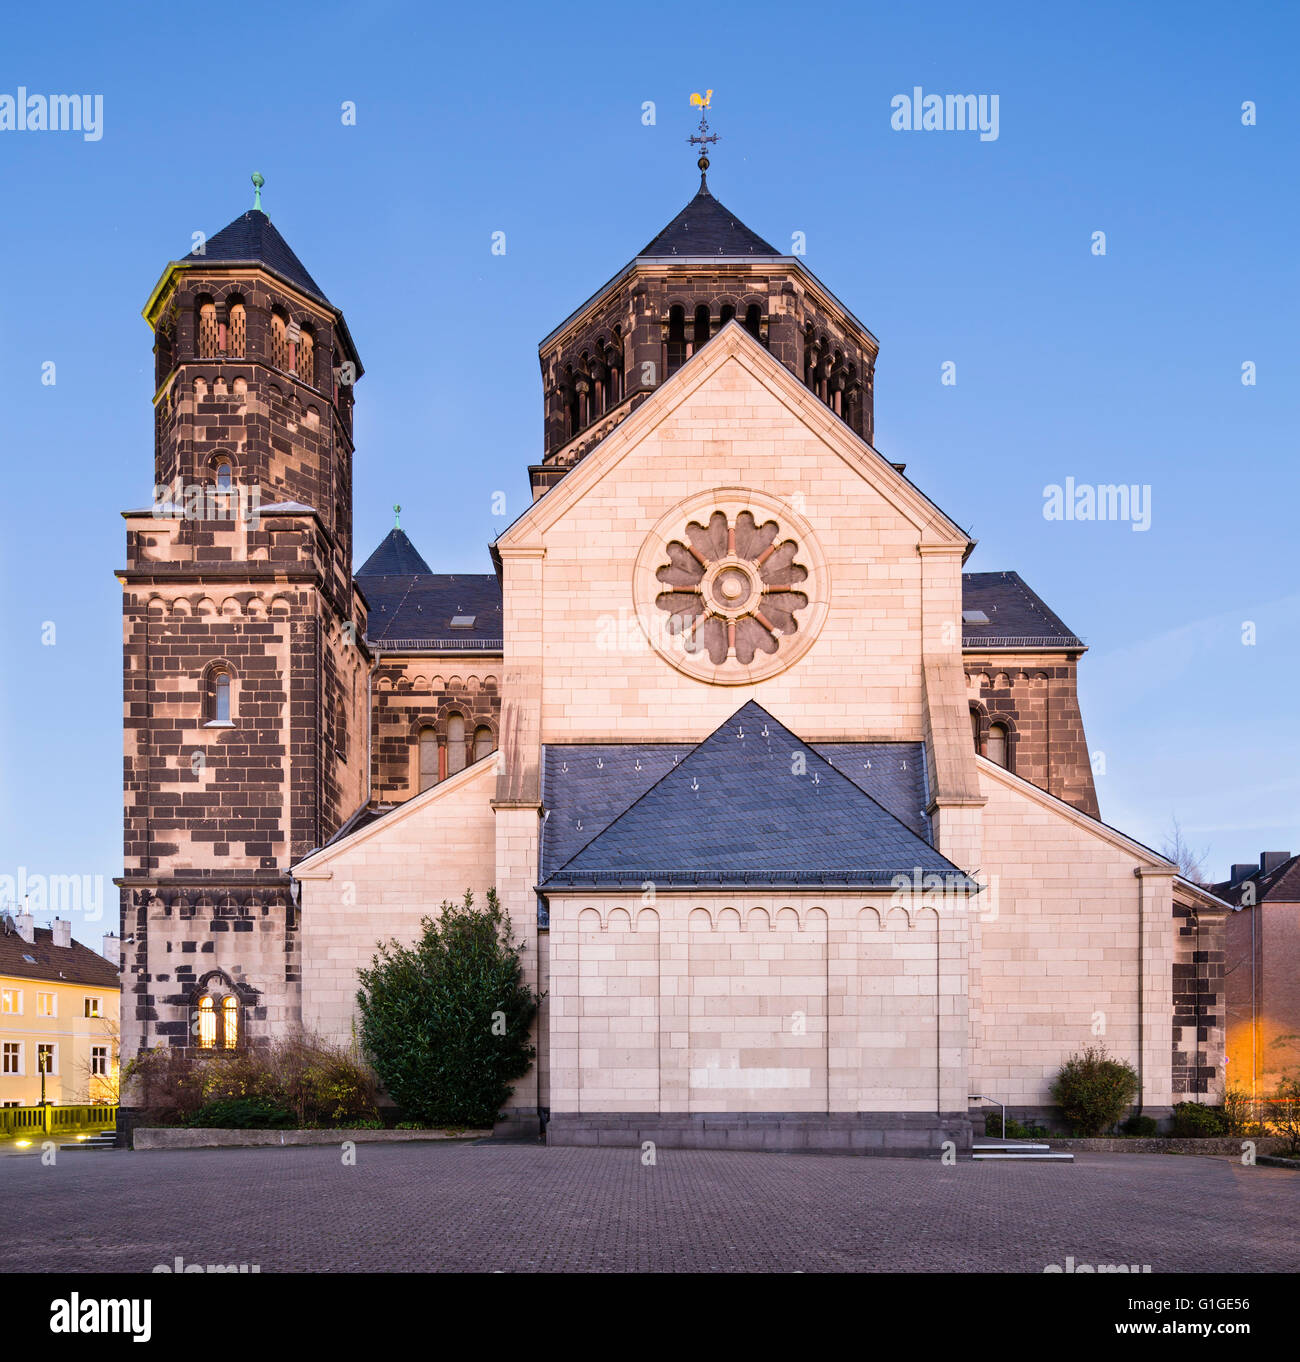 Side view of the catholic Herz-Jesu church in Aachen Burtscheid, Germany with night blue sky. Stock Photo